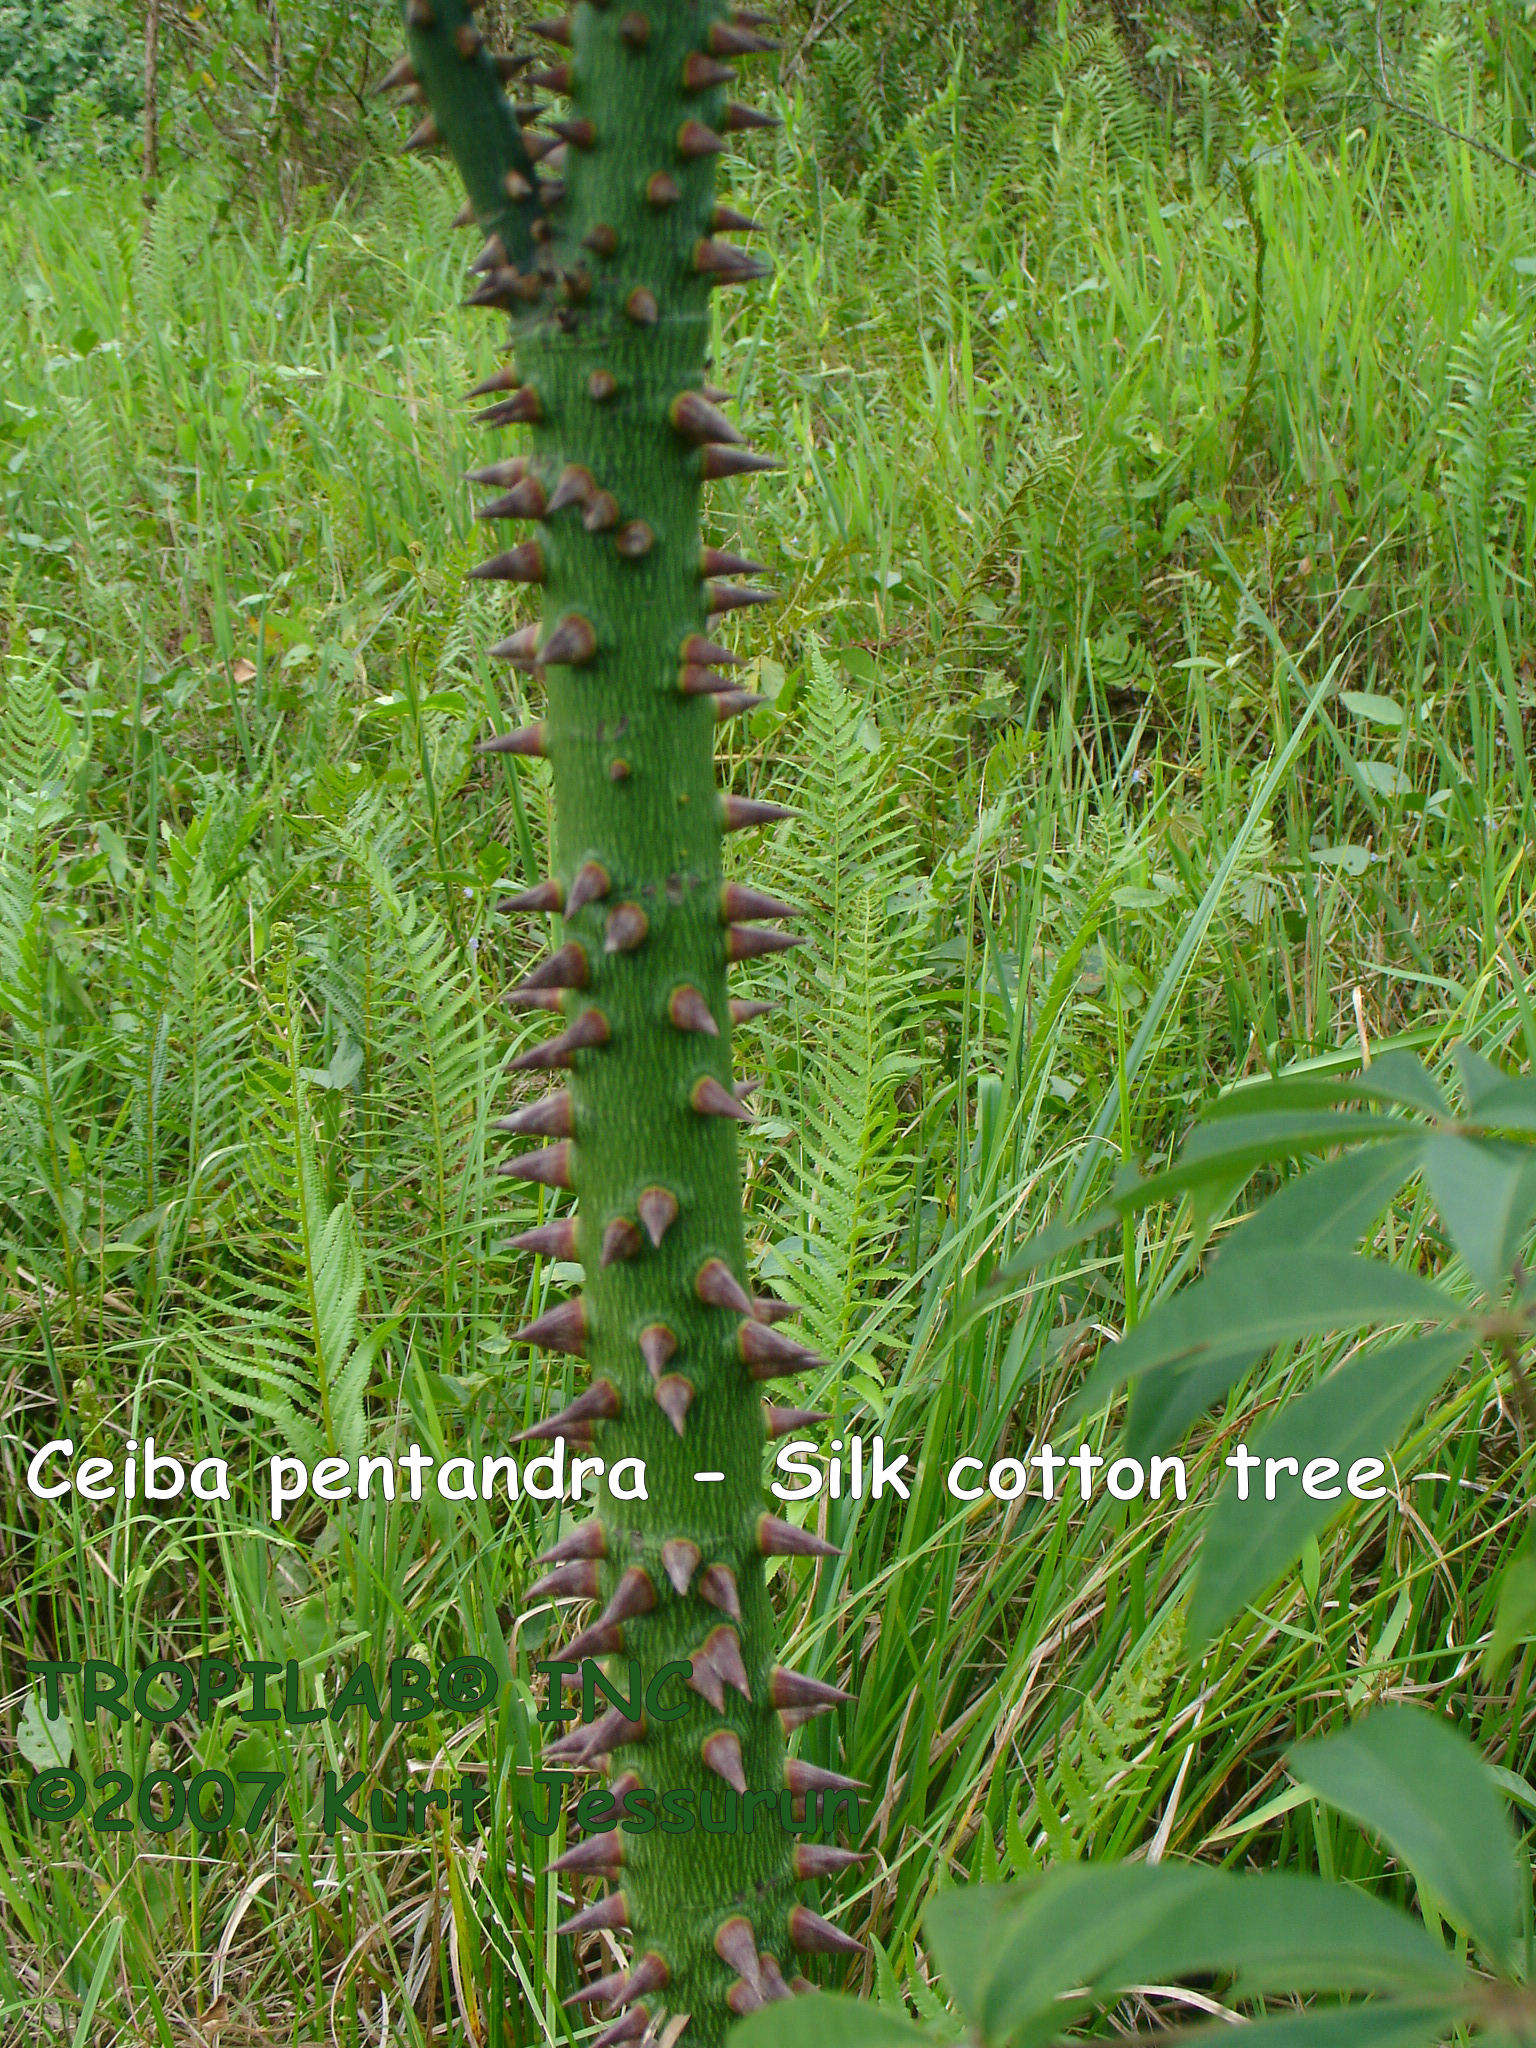 Ceiba pentandra - Kapok tree young stem